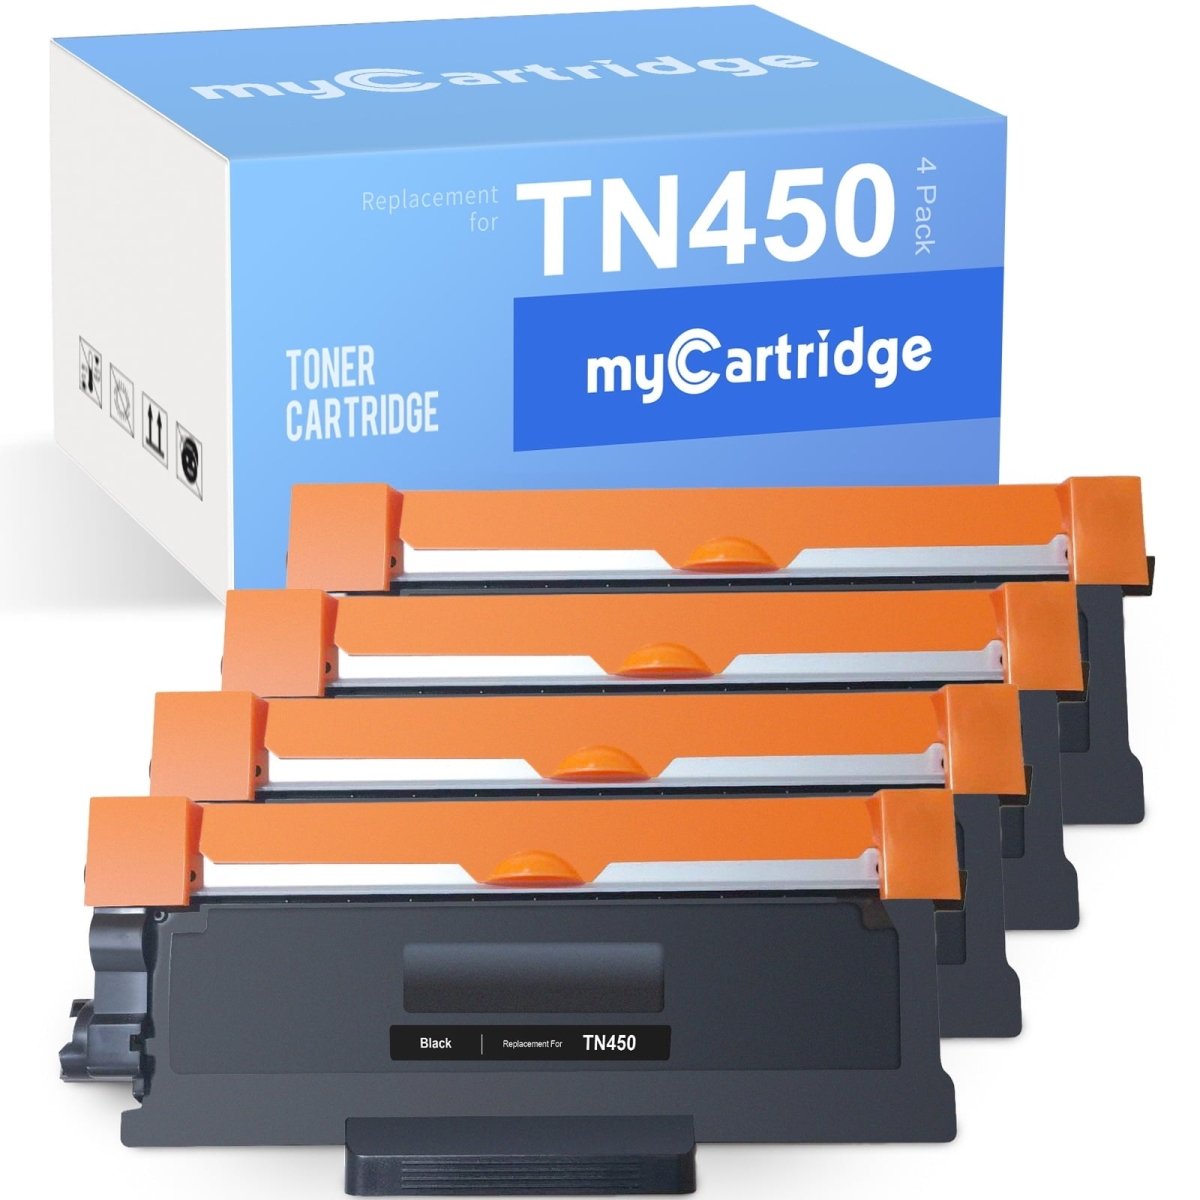 Compatible Brother TN450 Toner Cartridge - Black - High Yield - 4 Pack - Linford Office:Printer Ink & Toner Cartridge